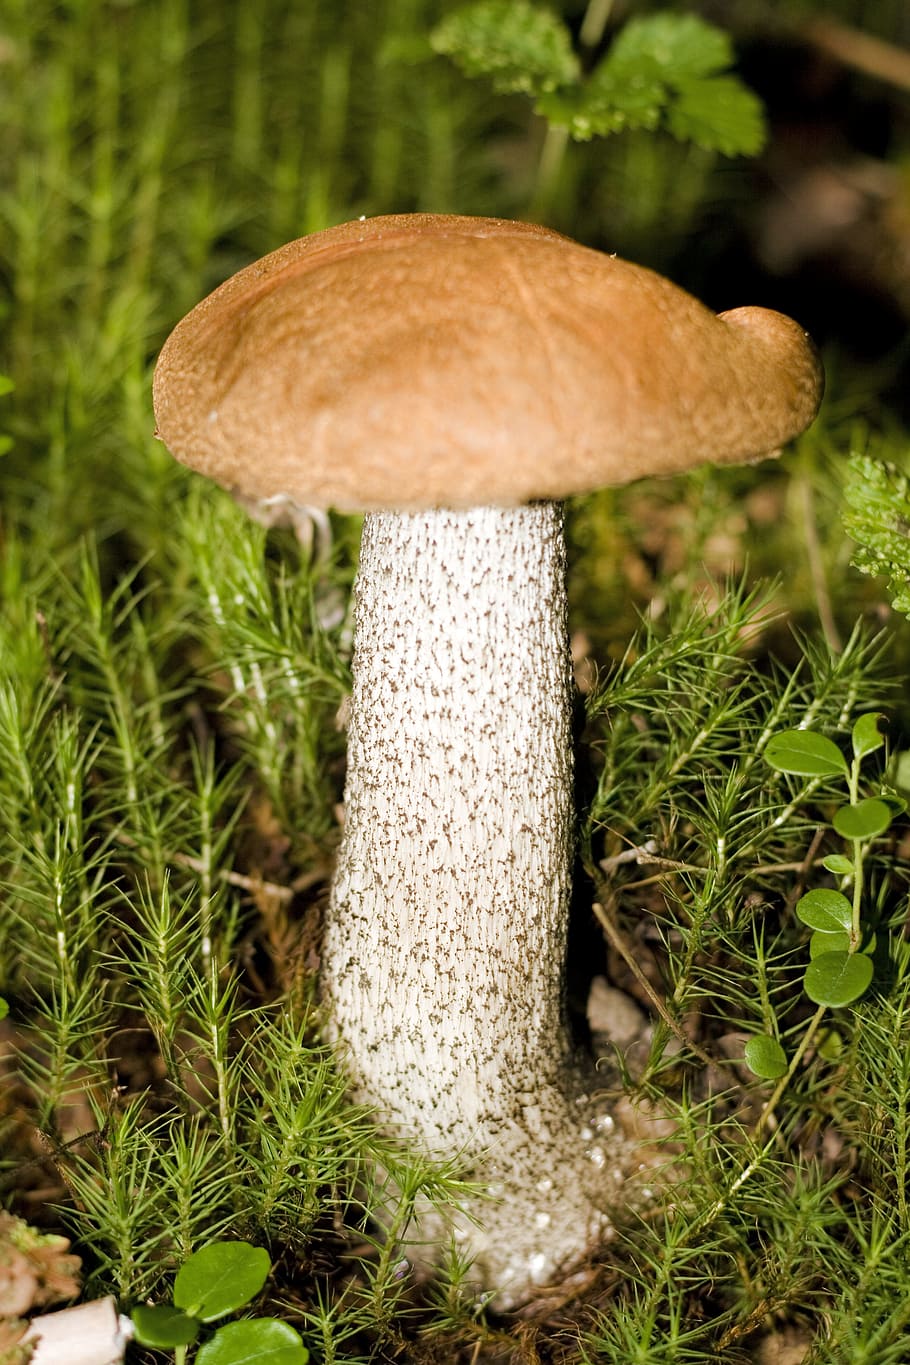 fungus, healthy, mushroom, nature, objects, organic, raw, vegetable, growth, plant